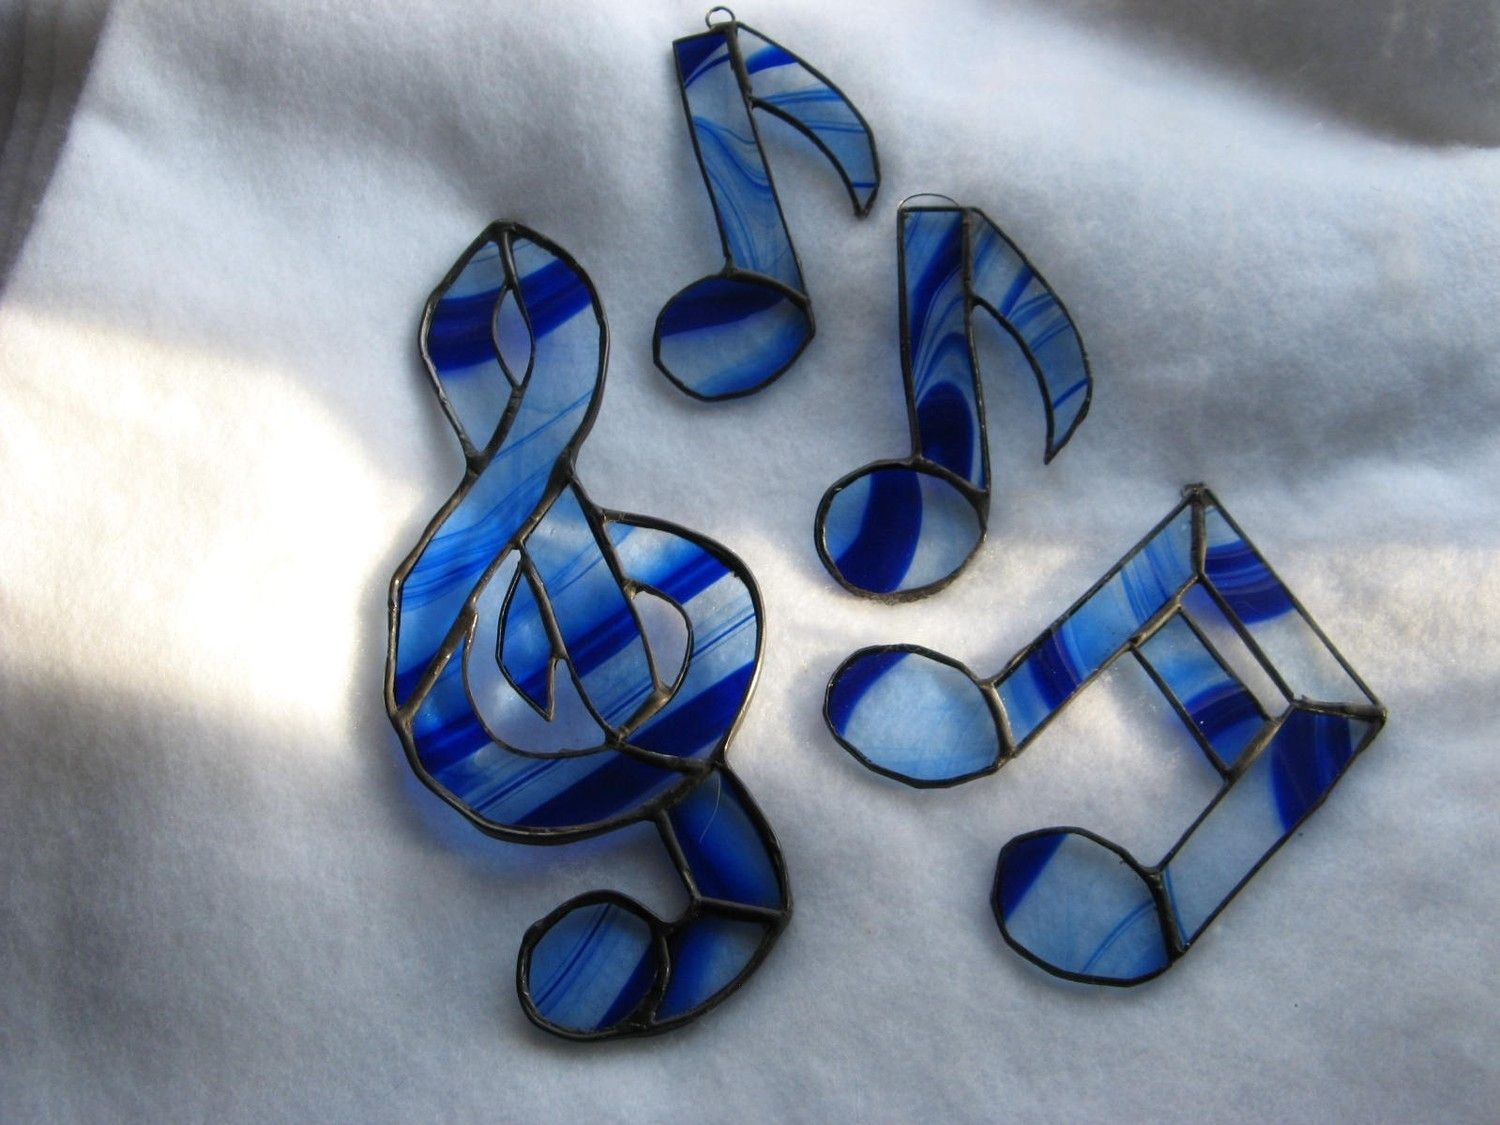 blue musical notes symbols